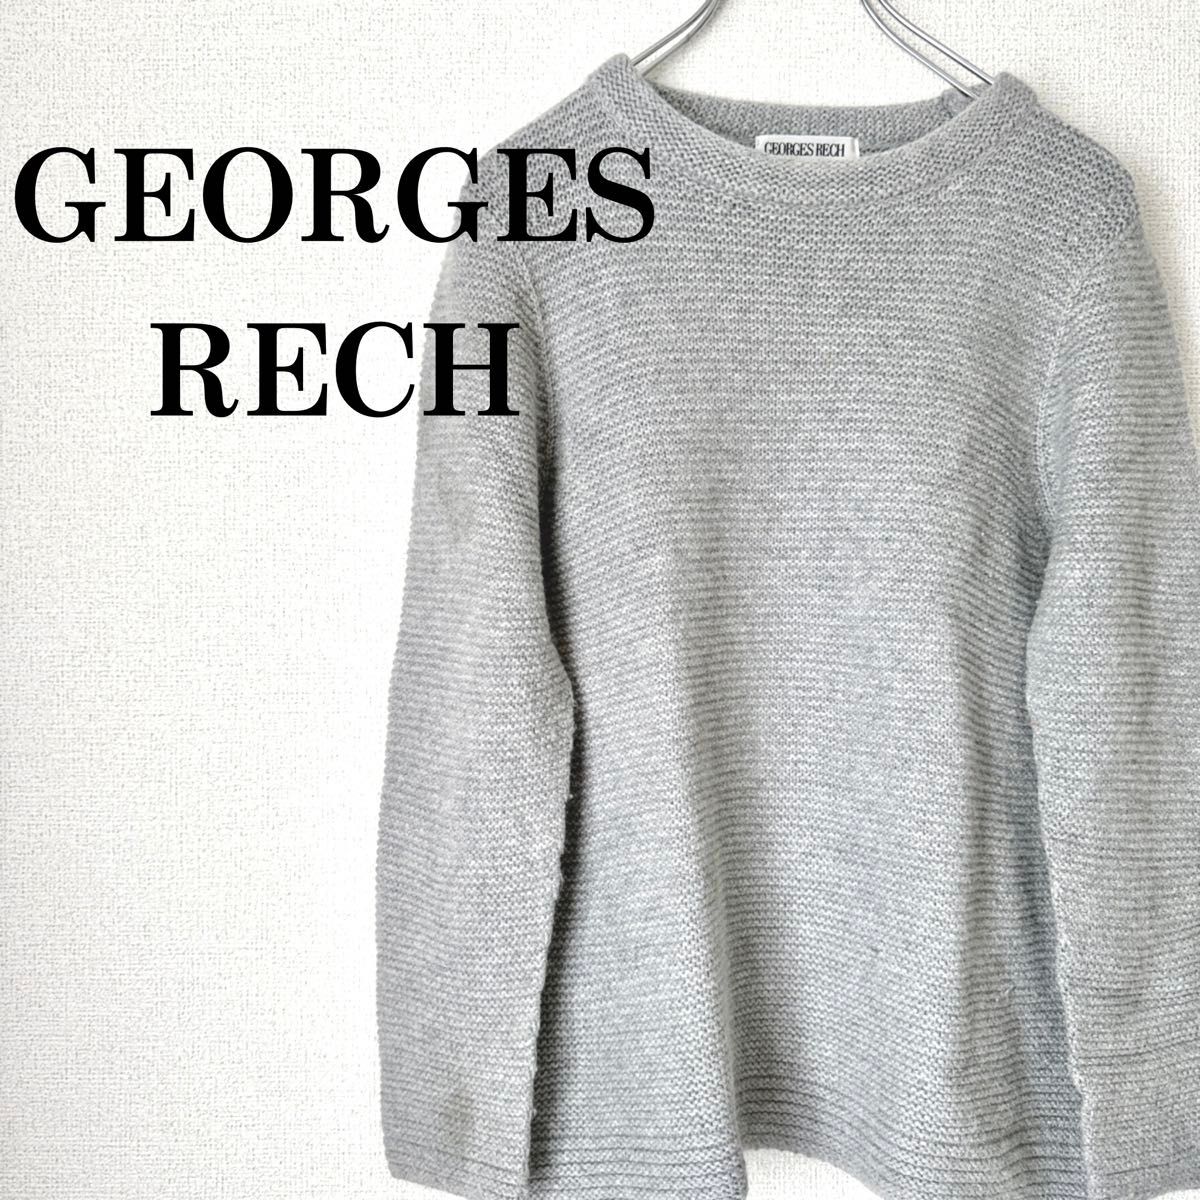 【GEORGES RECH】ジョルジュレッシュ セーター サイズS 36 プルオーバー 丸ネック 長袖 グレー 秋冬